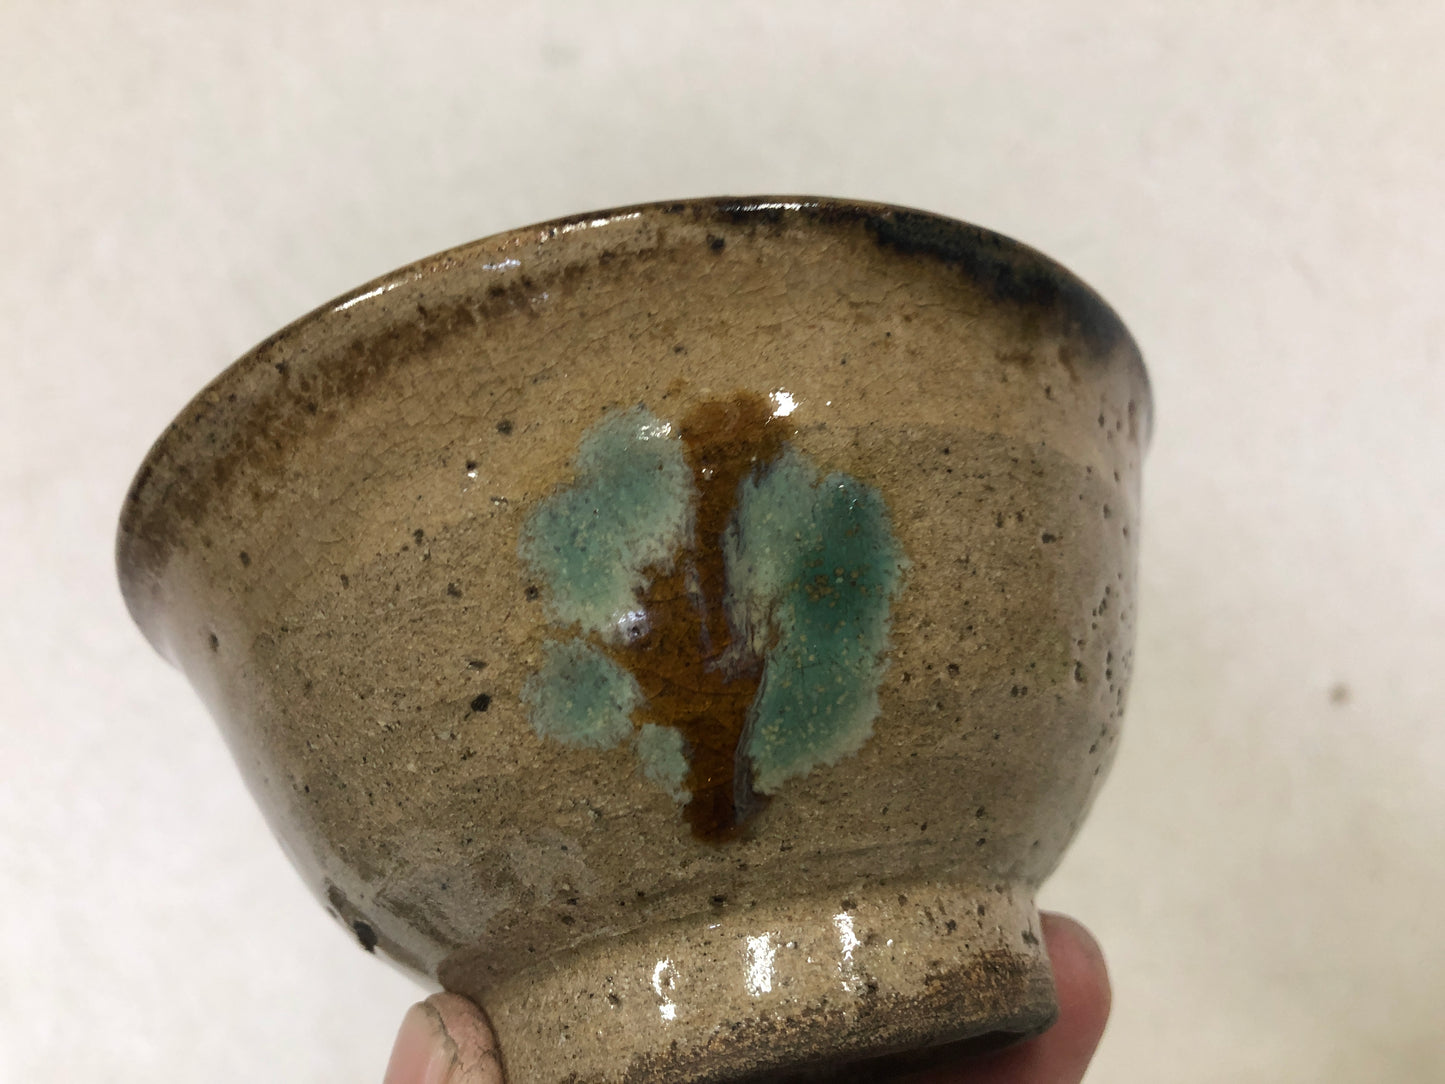 Y4108 CHAWAN Ryukyu-ware kintsugi Japan antique tea ceremony pottery bowl